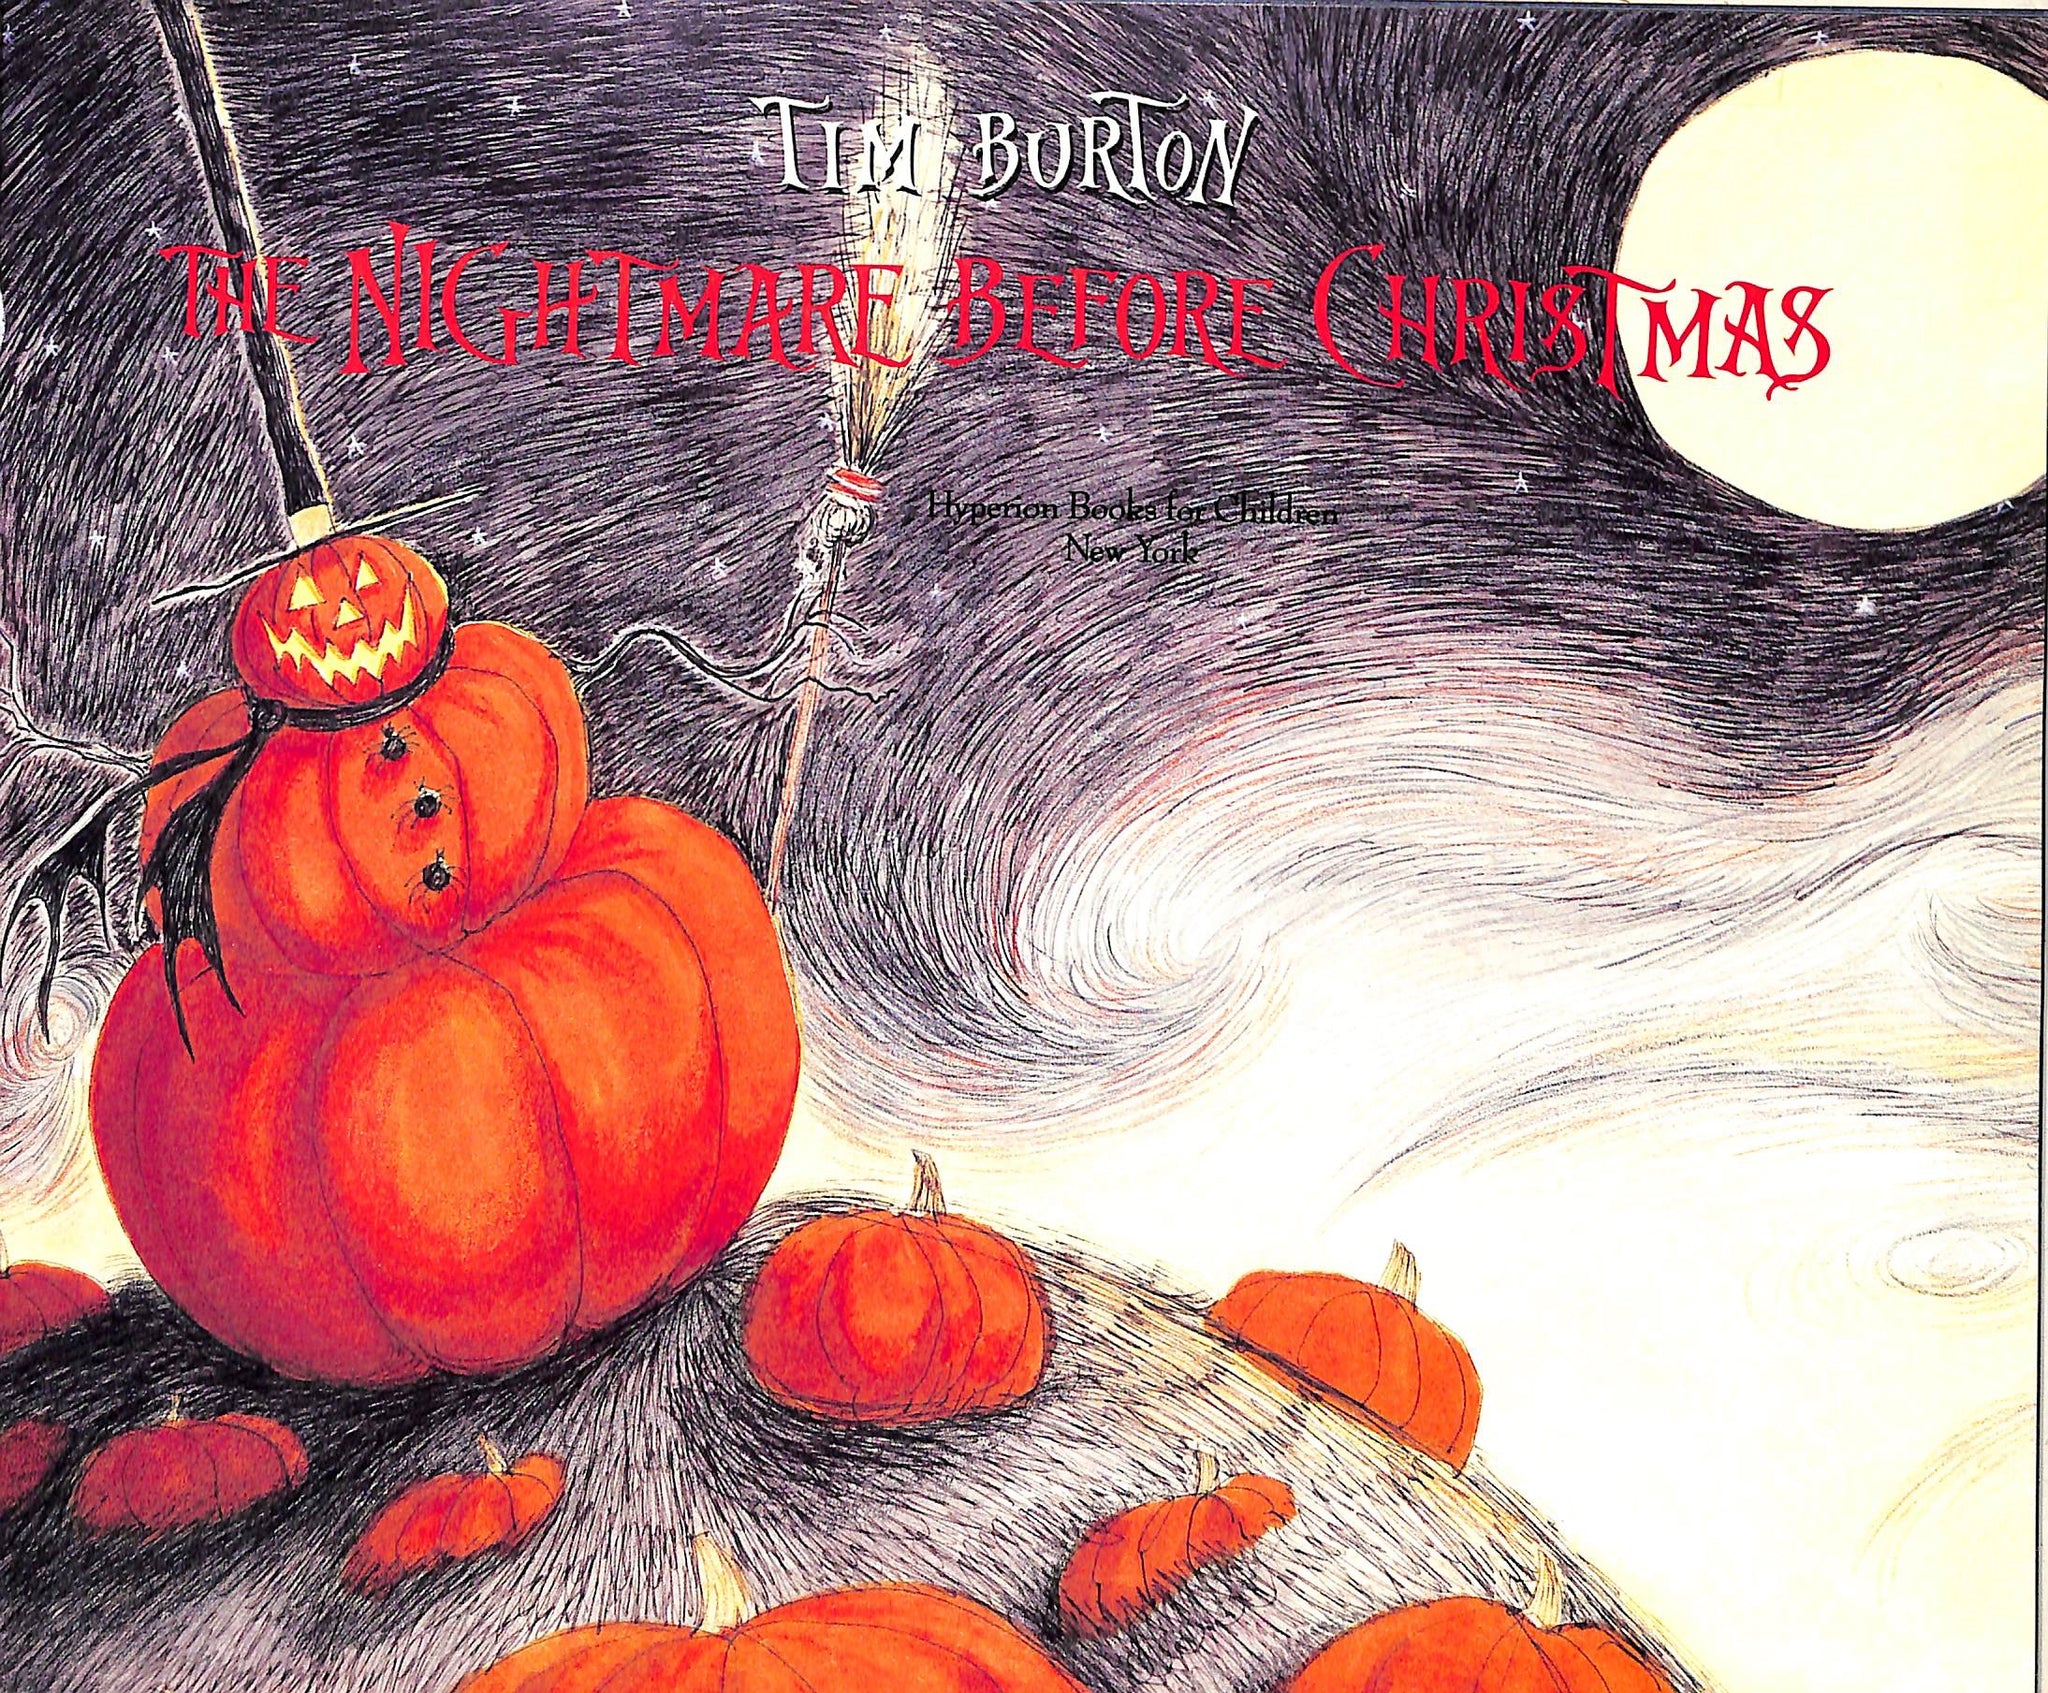 Vintage 90s Nightmare Before Christmas Coloring Book Poster Book Tim Burton  1993 Collectible Rare Golden 